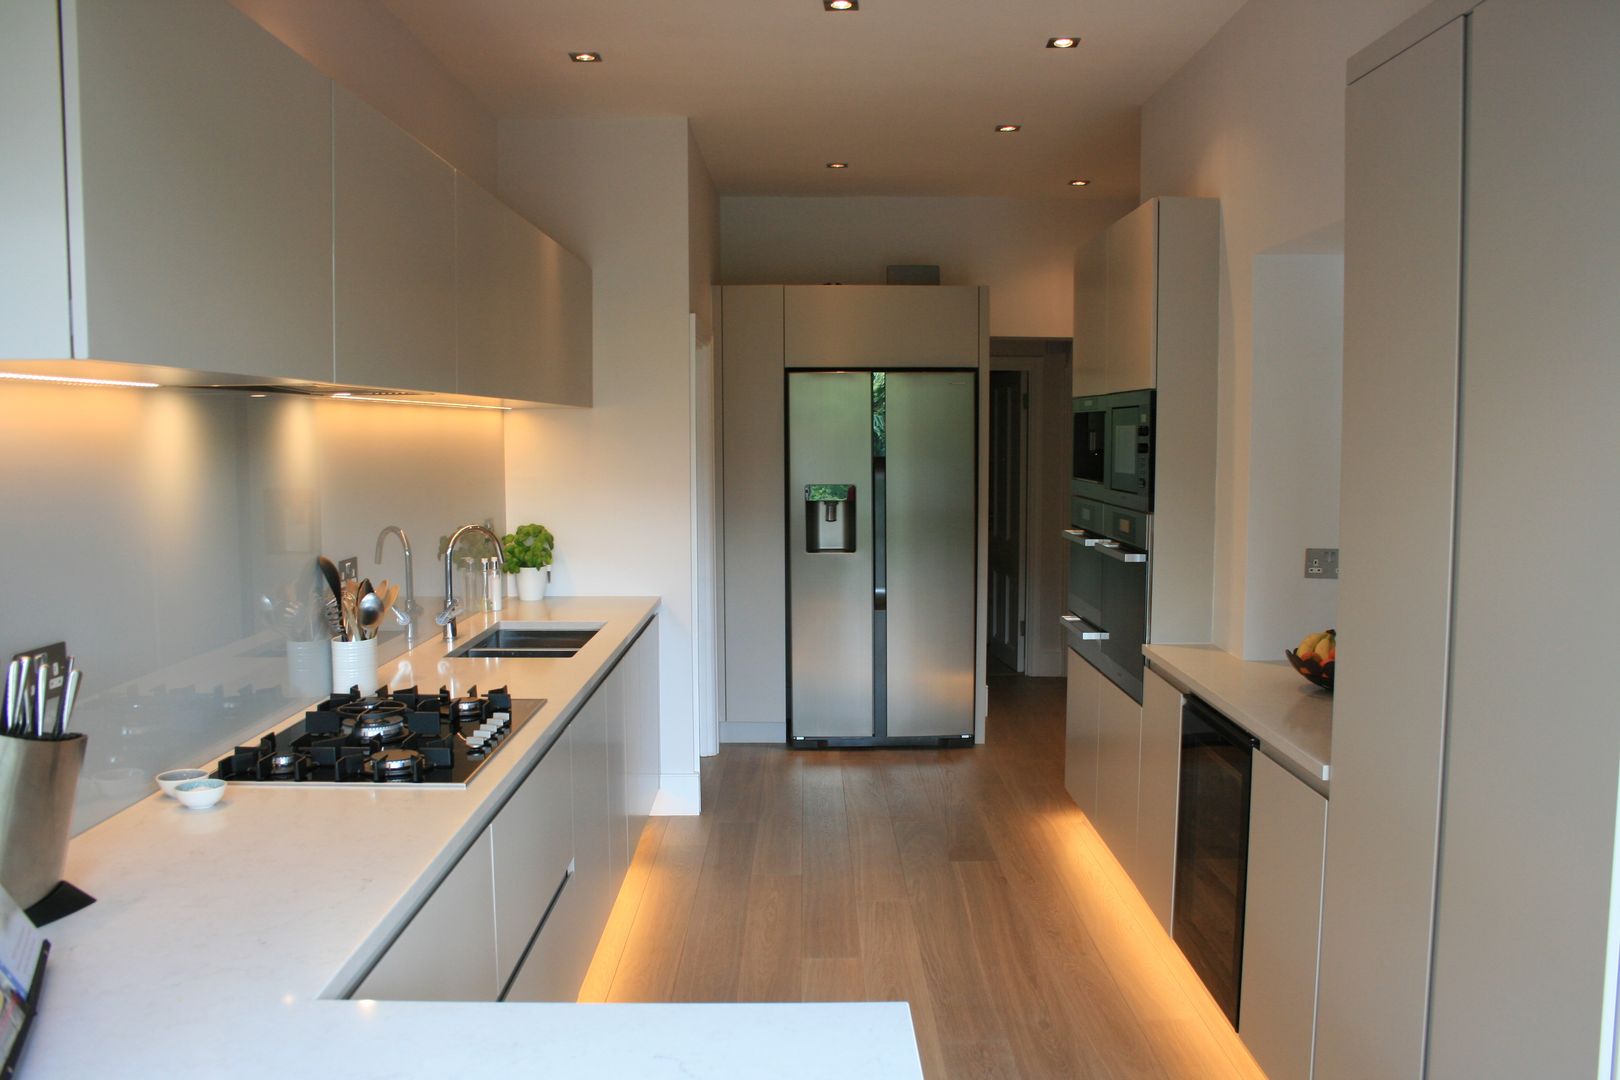 Barnes Kitchen , Place Design Kitchens and Interiors Place Design Kitchens and Interiors Cocinas de estilo minimalista